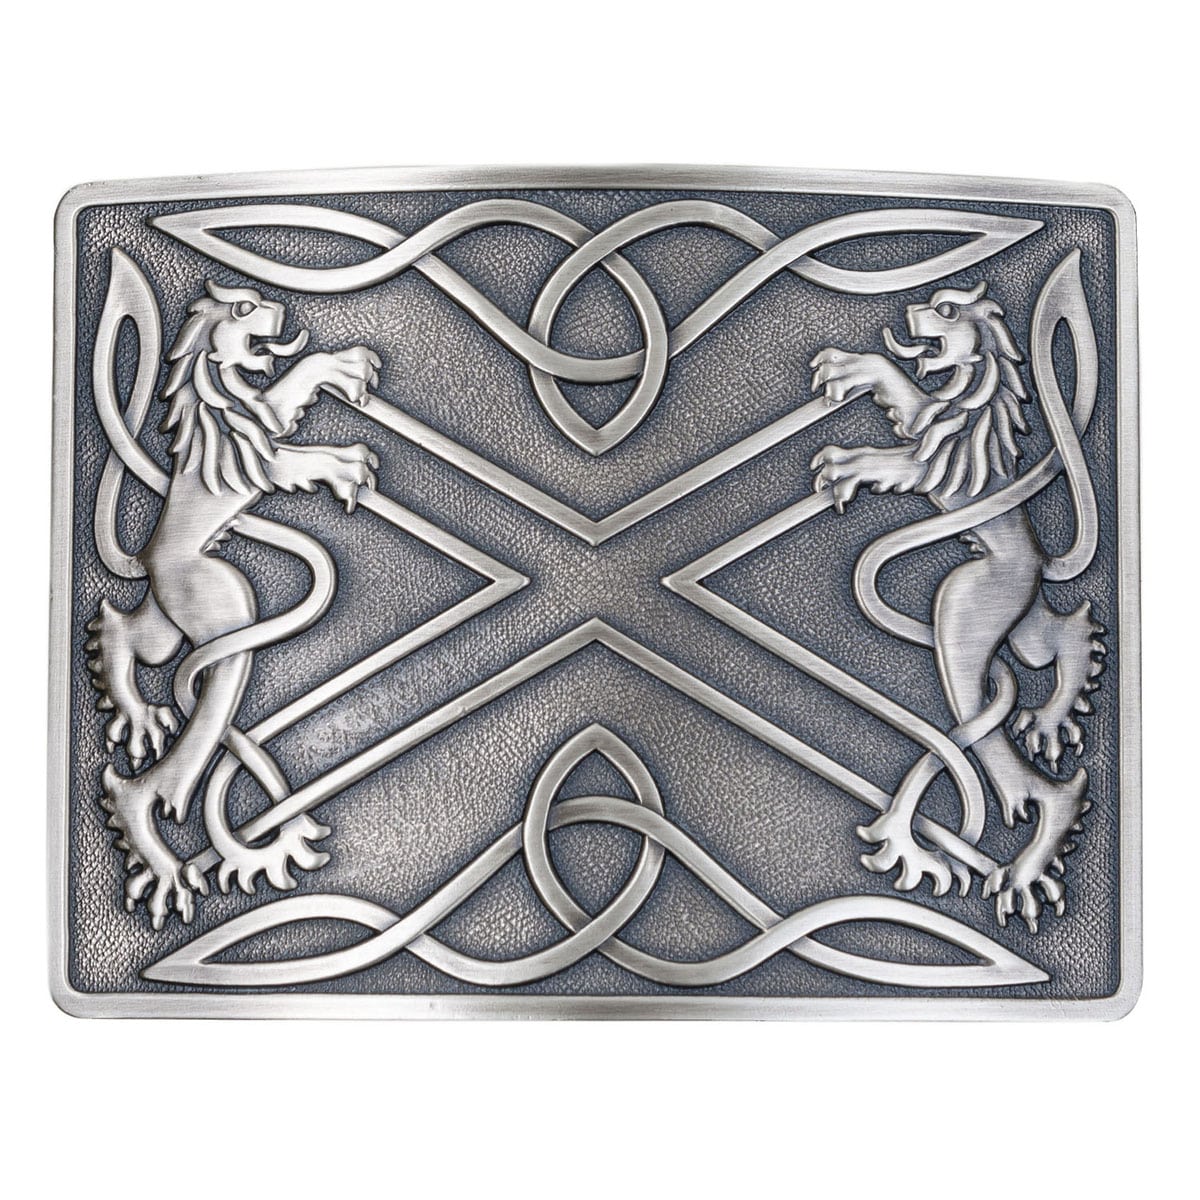 CC Scottish Kilt Belt Buckle Matt Oval Design with Thistle Badge Antique Finish 